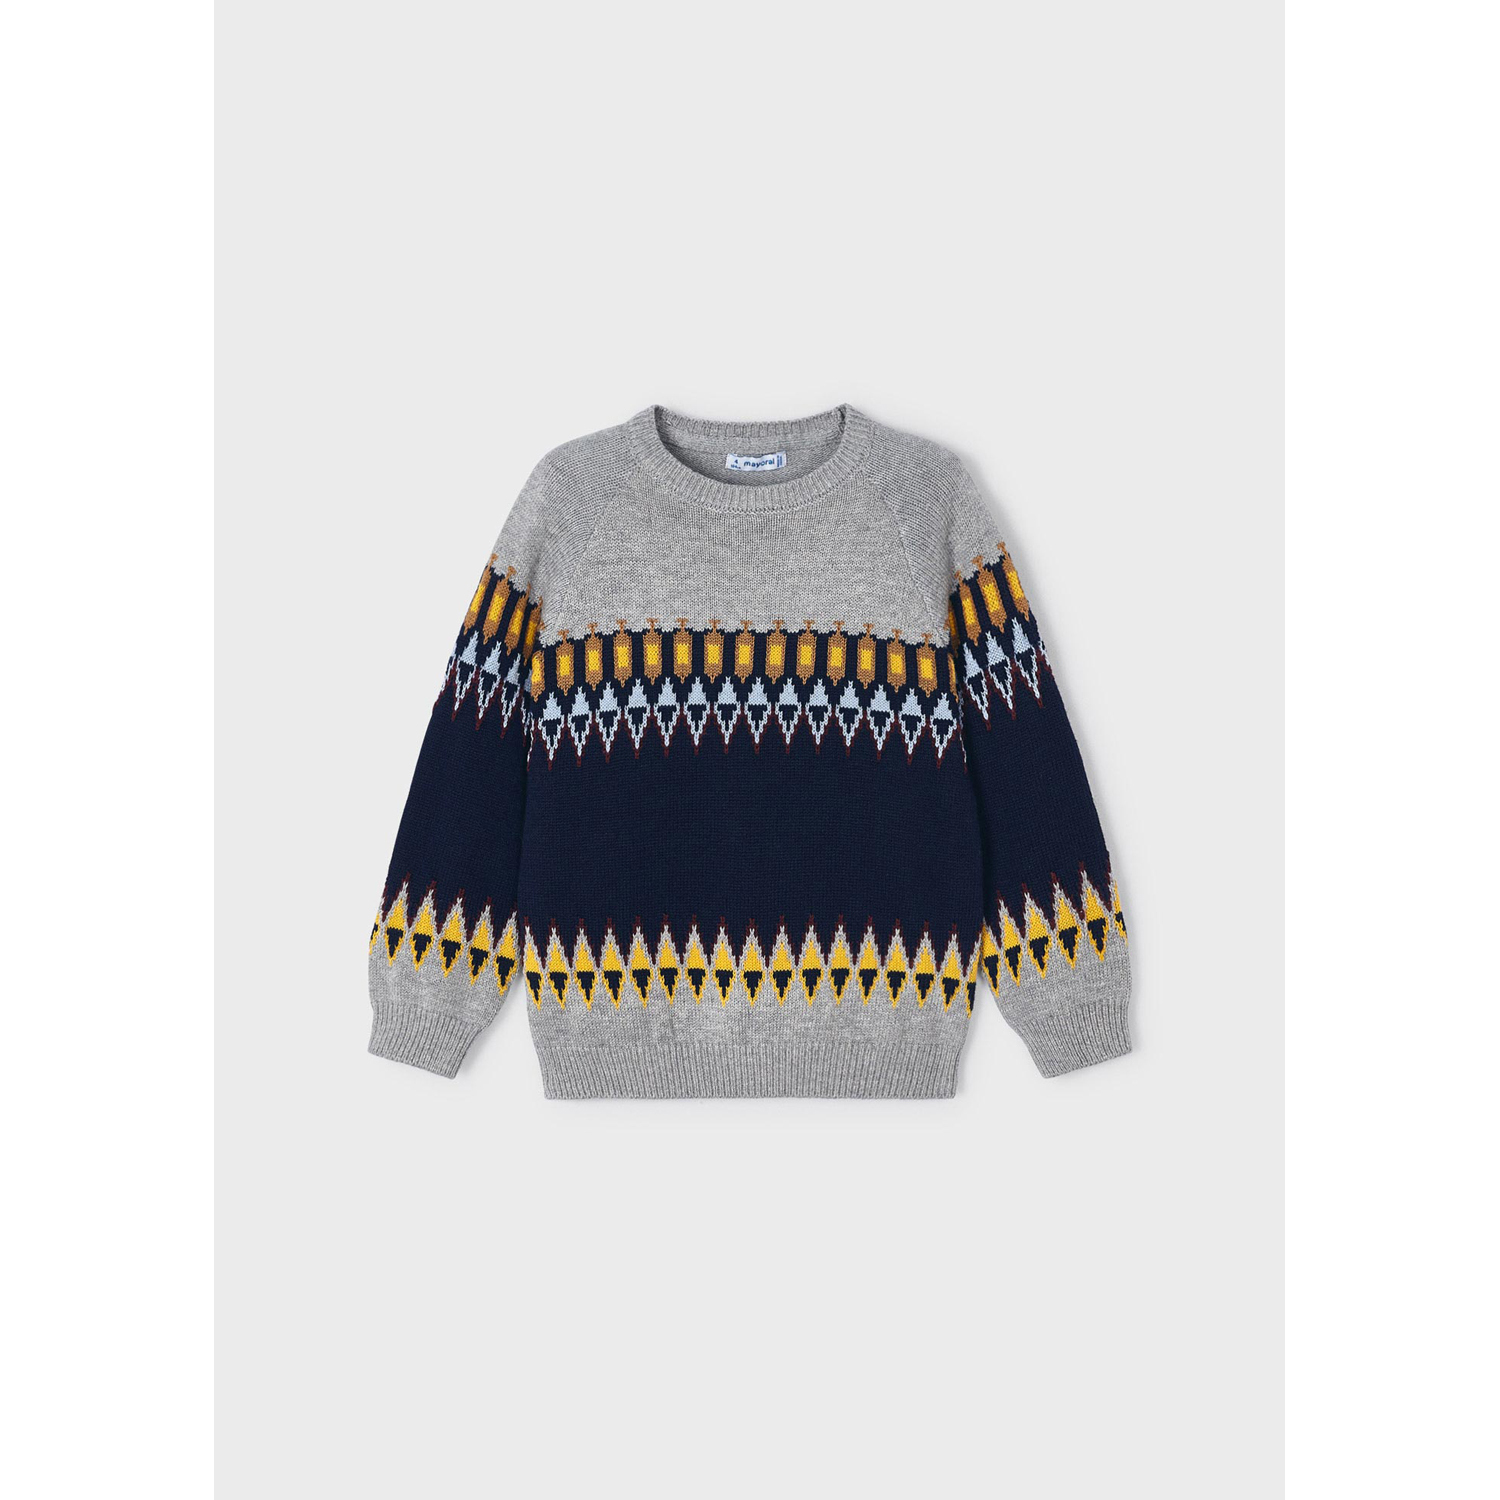 Mayoral Boys 4321 062 Knit Jacquard Sweater Grey Navy Multi Colored - Kids  Abel & Lula Clothing Online | Shop Kids Abel & Lula Clothes